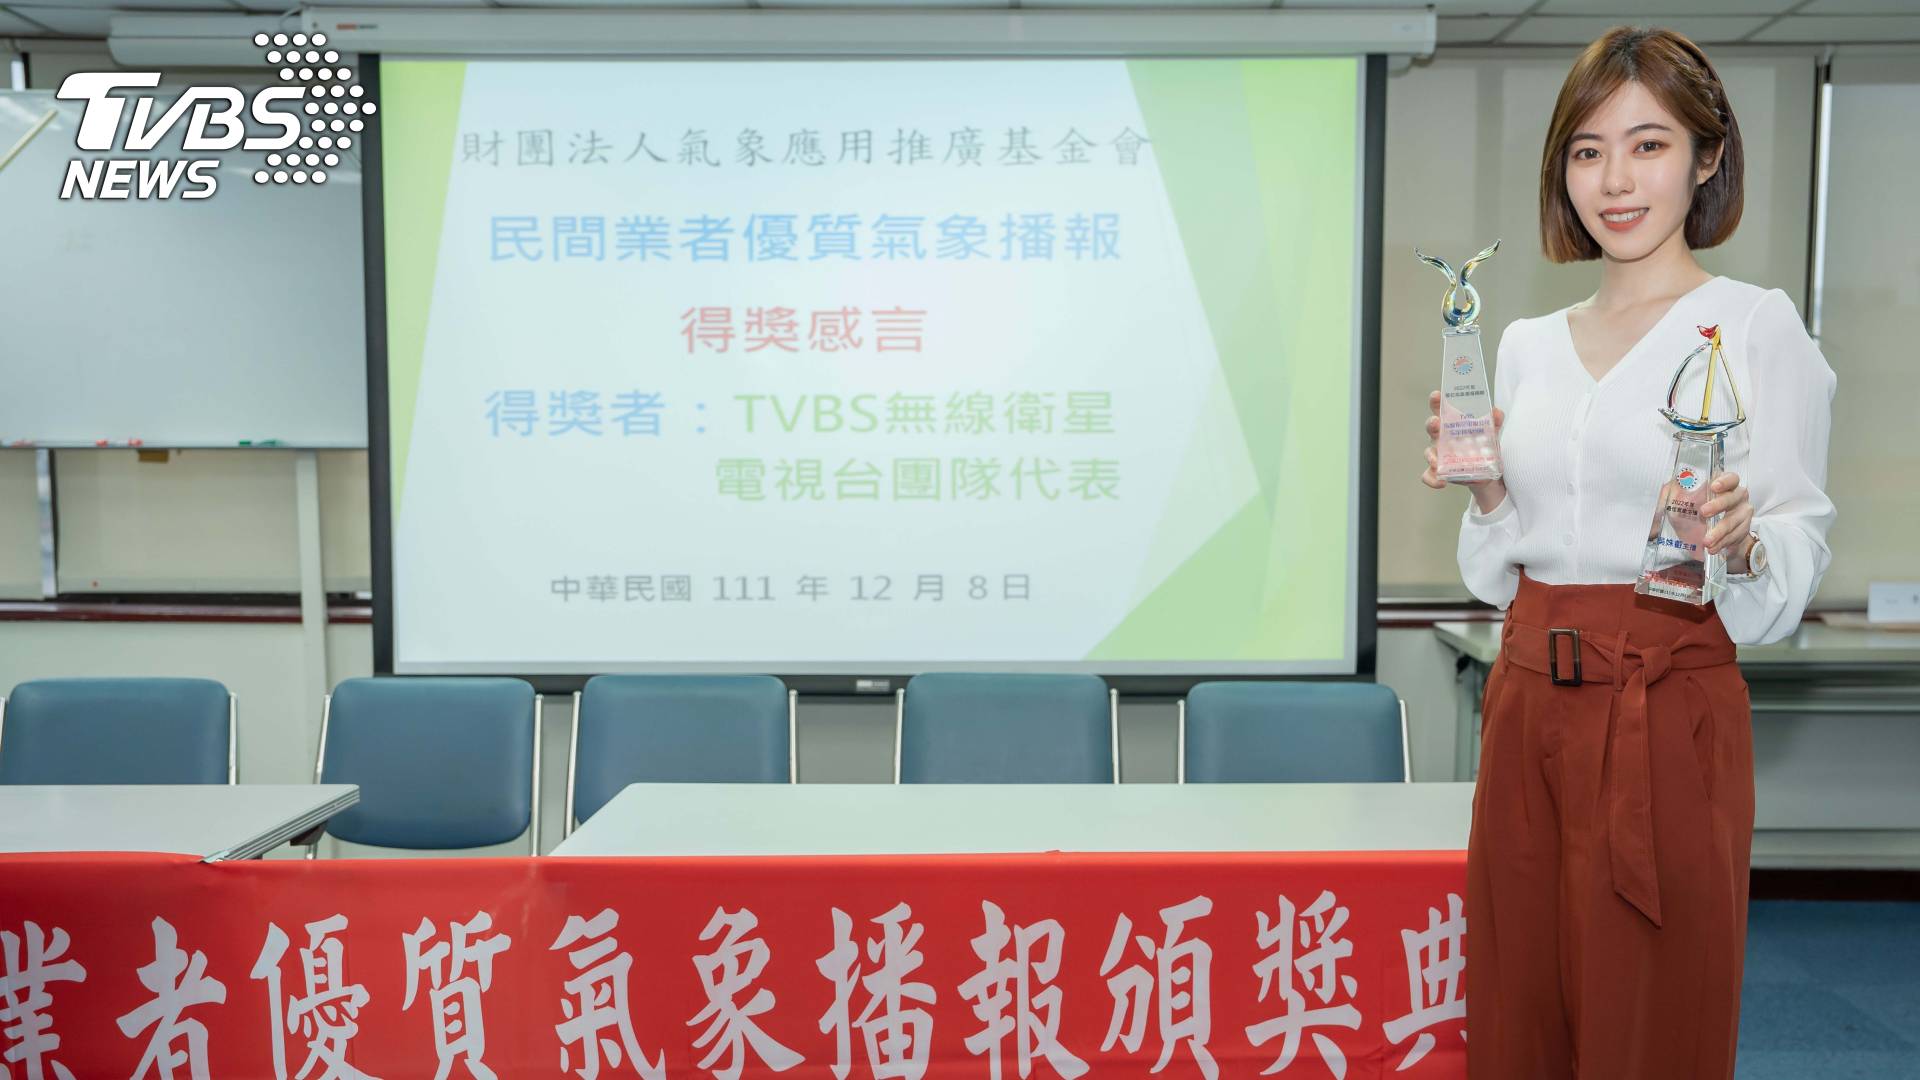 TVBS氣象團隊將持續提供氣候變遷的資訊提供，並努力提升相關資訊的比例 (圖/TVBS) TVBS五度奪下年度「最佳氣象播報團隊獎」肯定 吳姝叡蟬聯最佳氣象主播